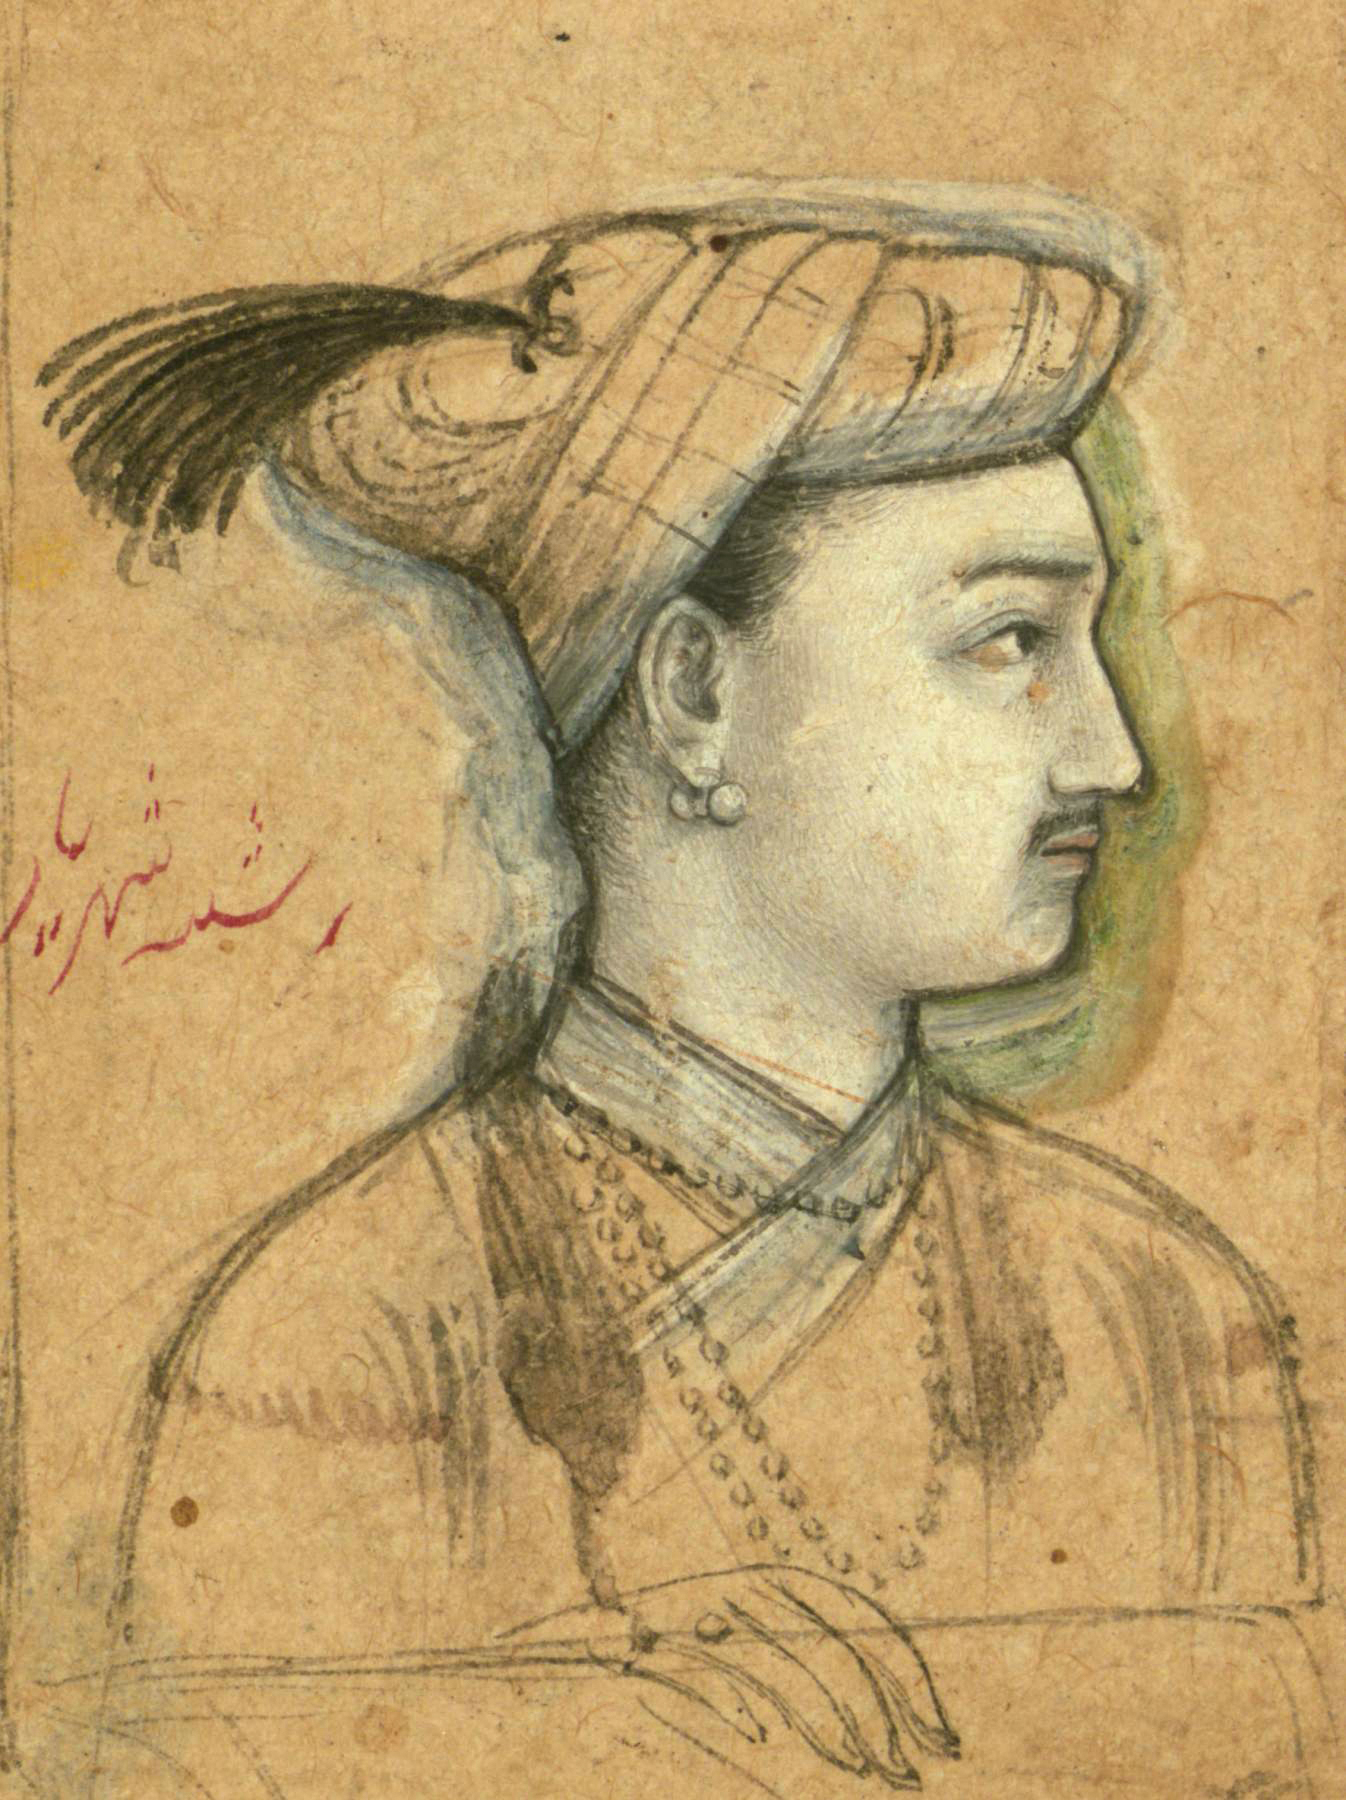 Image result for ladli begum tomb Agra